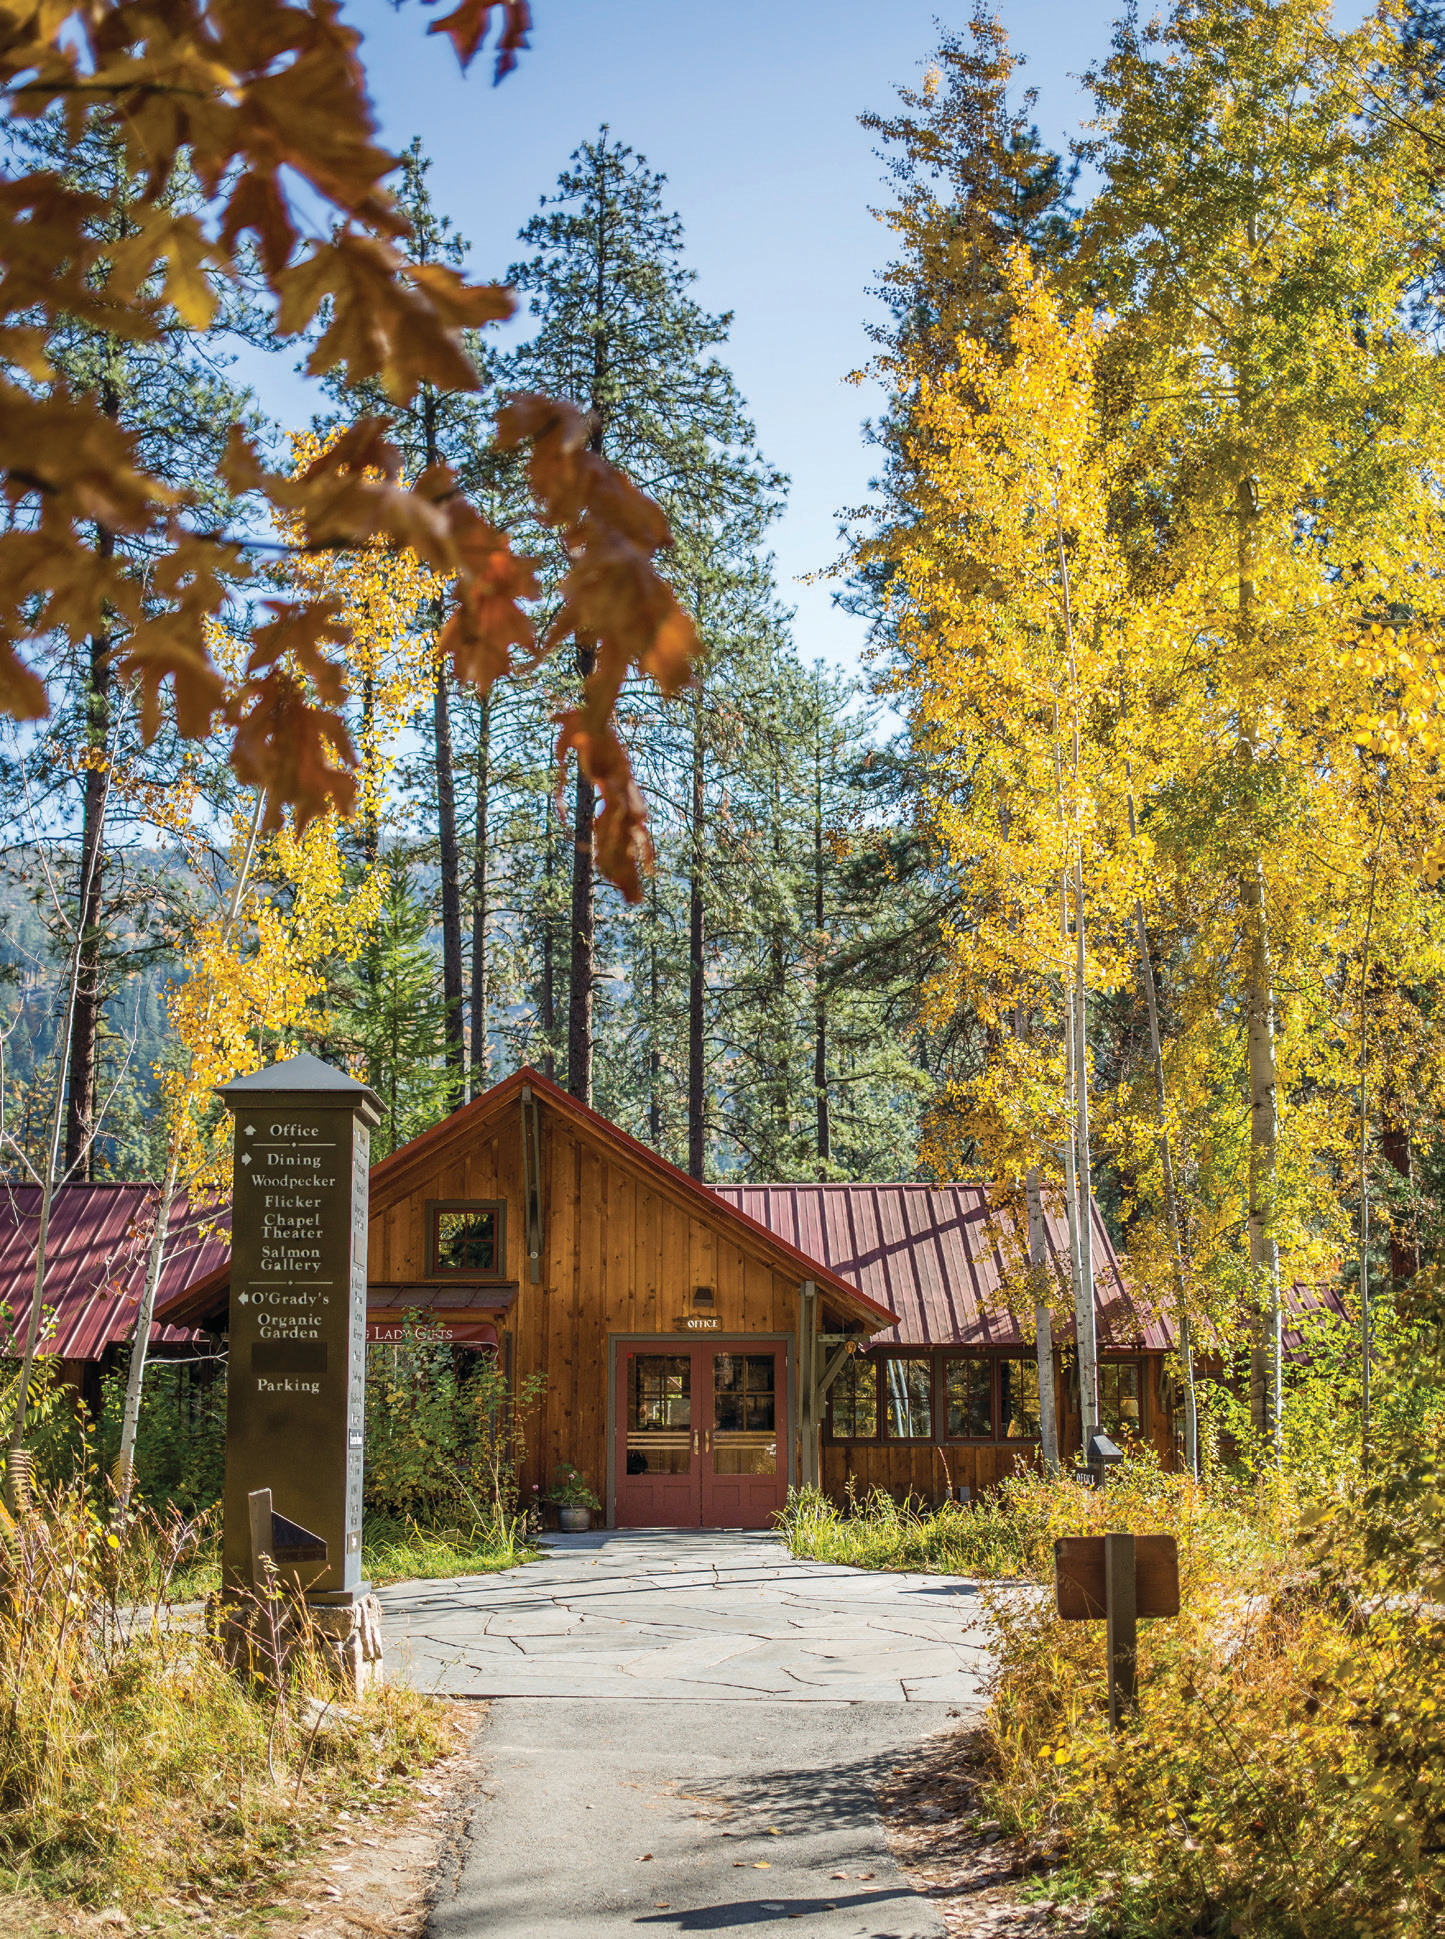 Sleeping Lady Mountain Resort provides a bucolic getaway to Leavenworth.